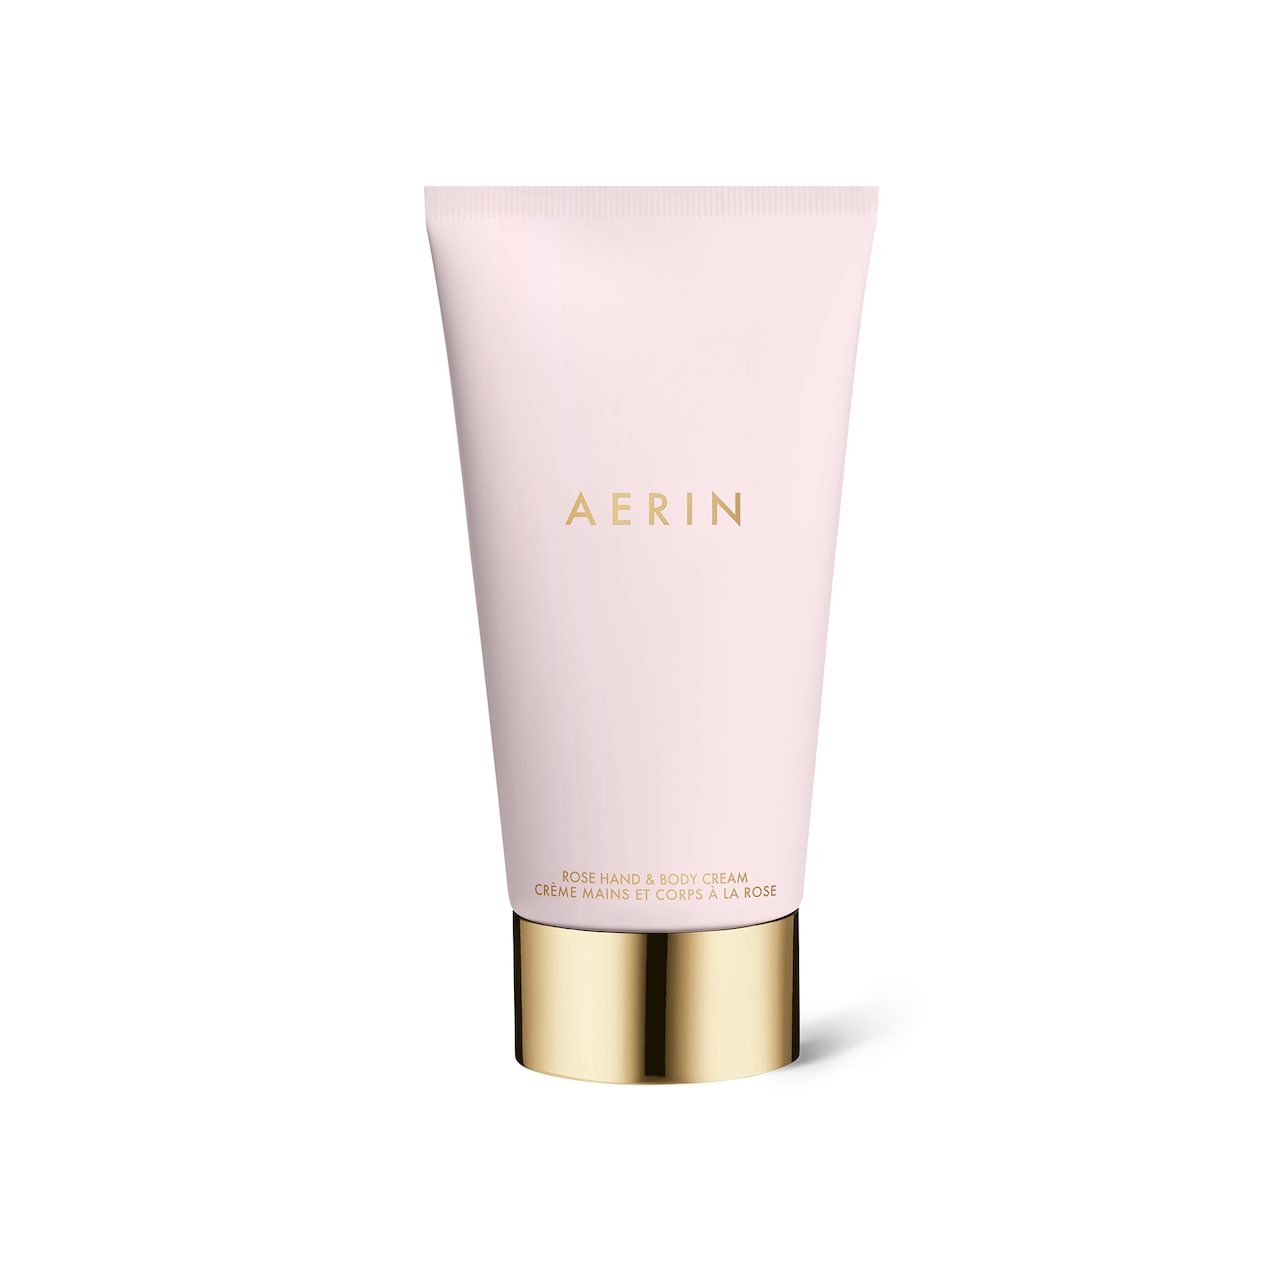 AERIN Rose Hand & Body Cream